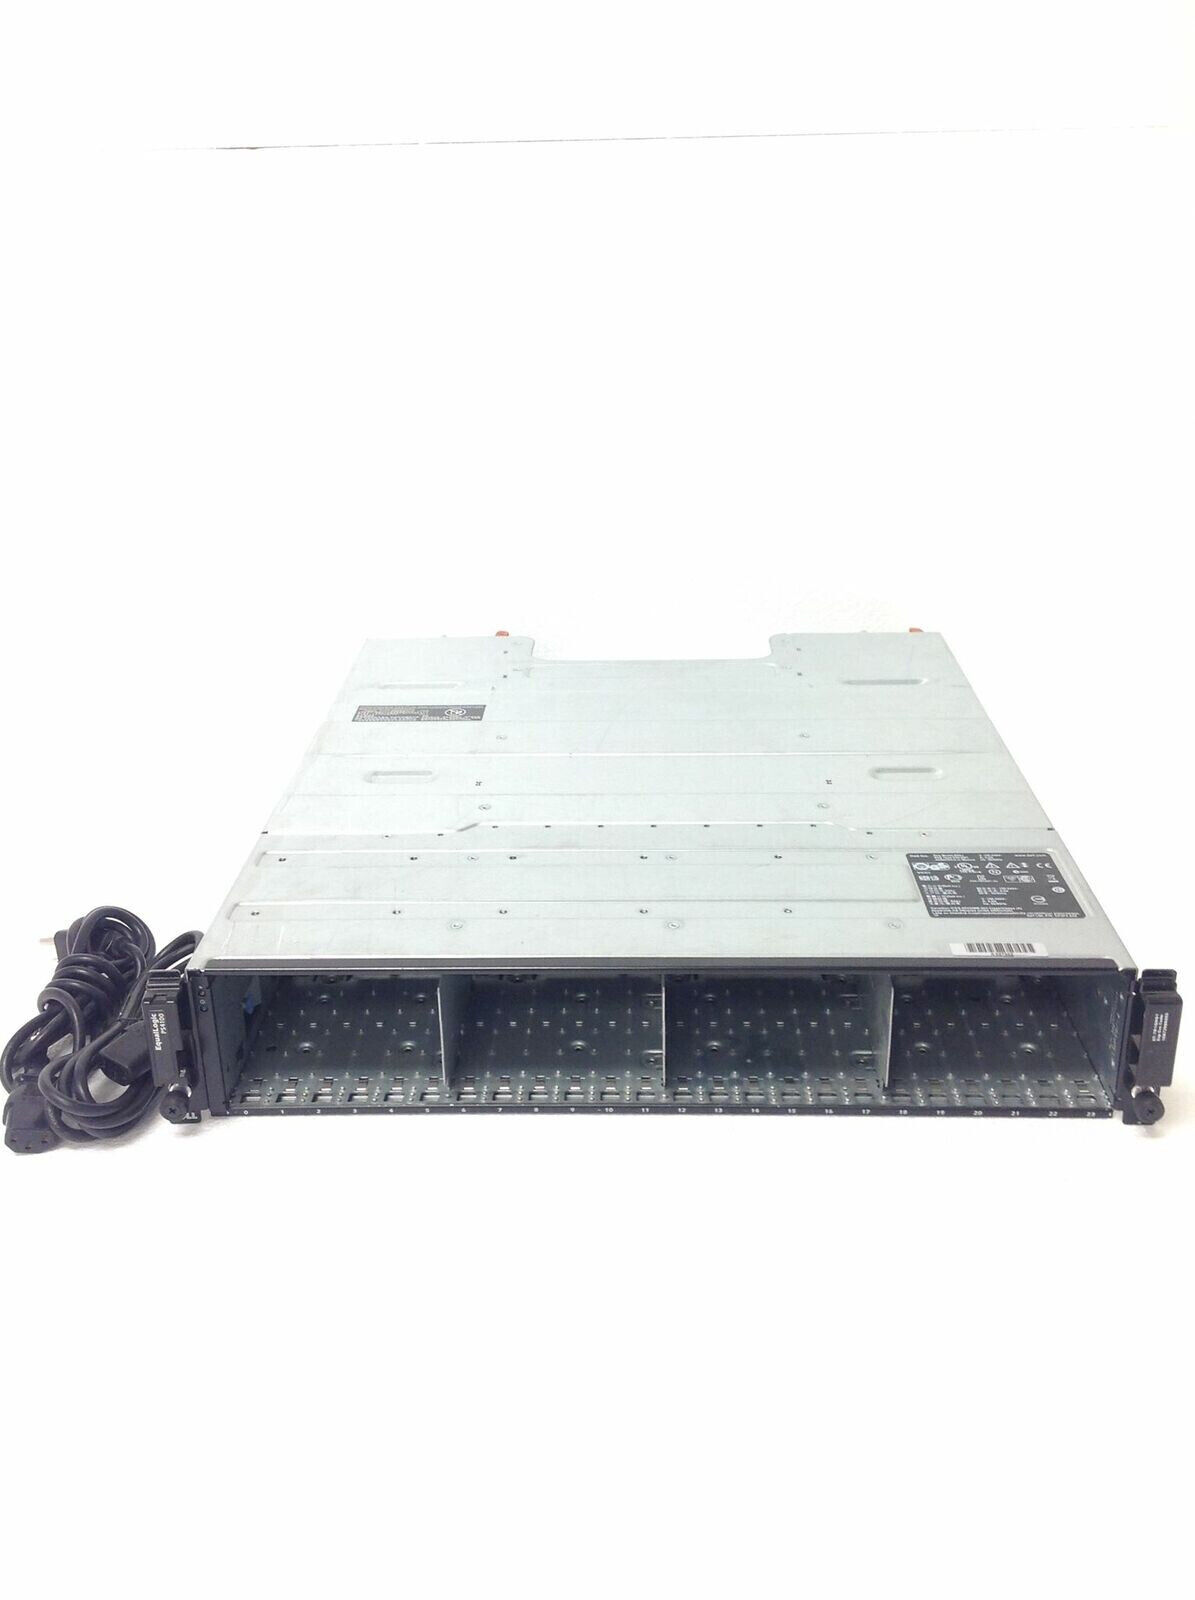 Dell Equallogic Ps4100 24 Bay Storage Array 2u W/2x Power Supplies, No Hdd